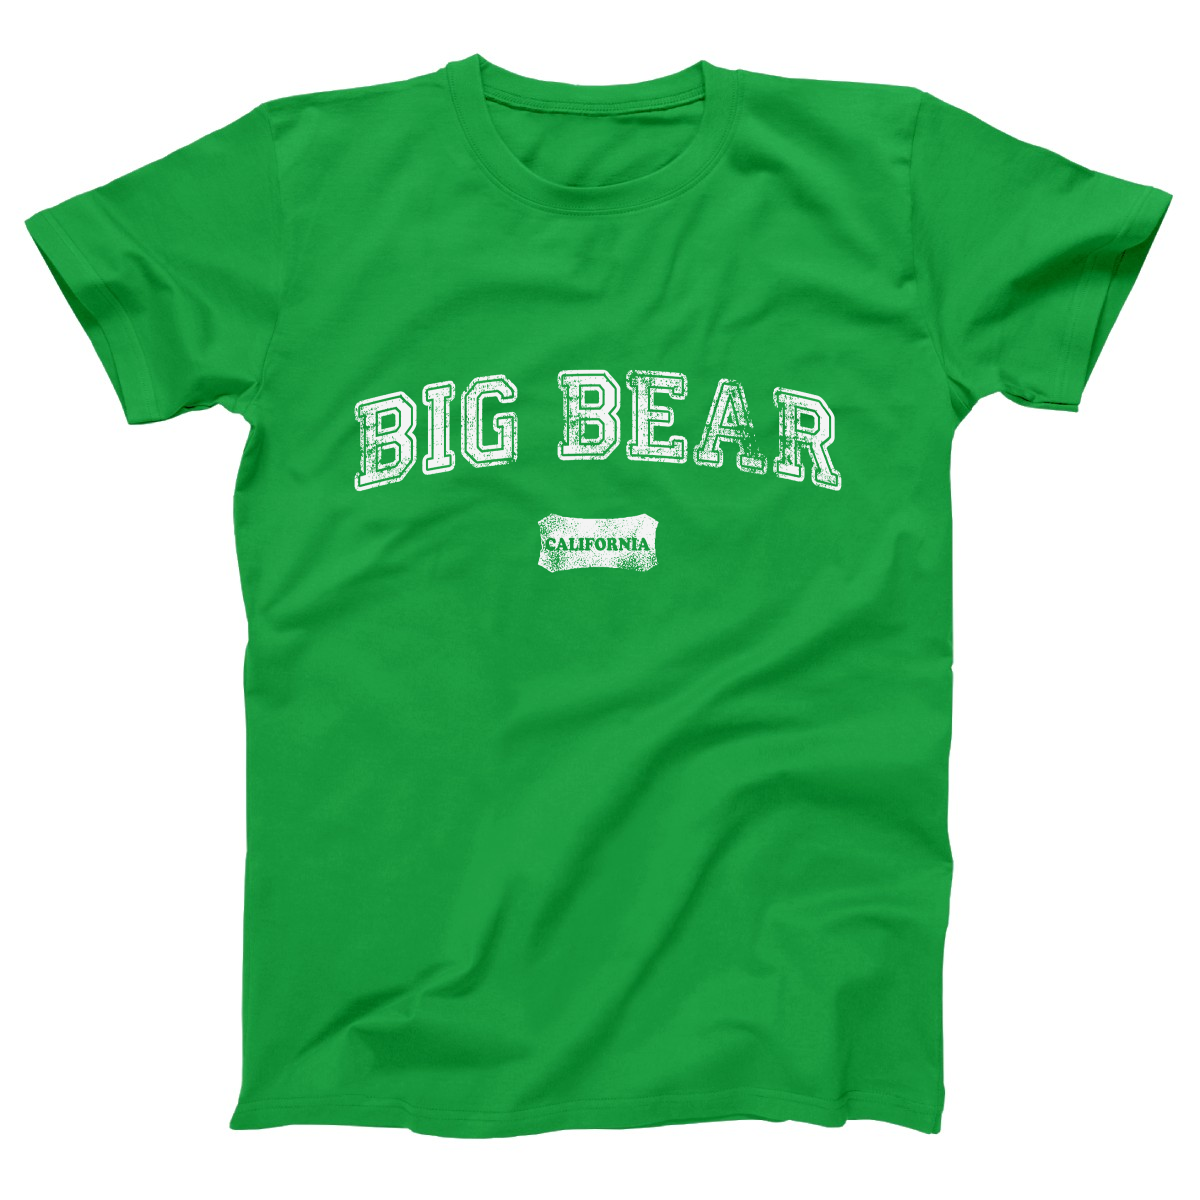 Big Bear Represent Women's T-shirt